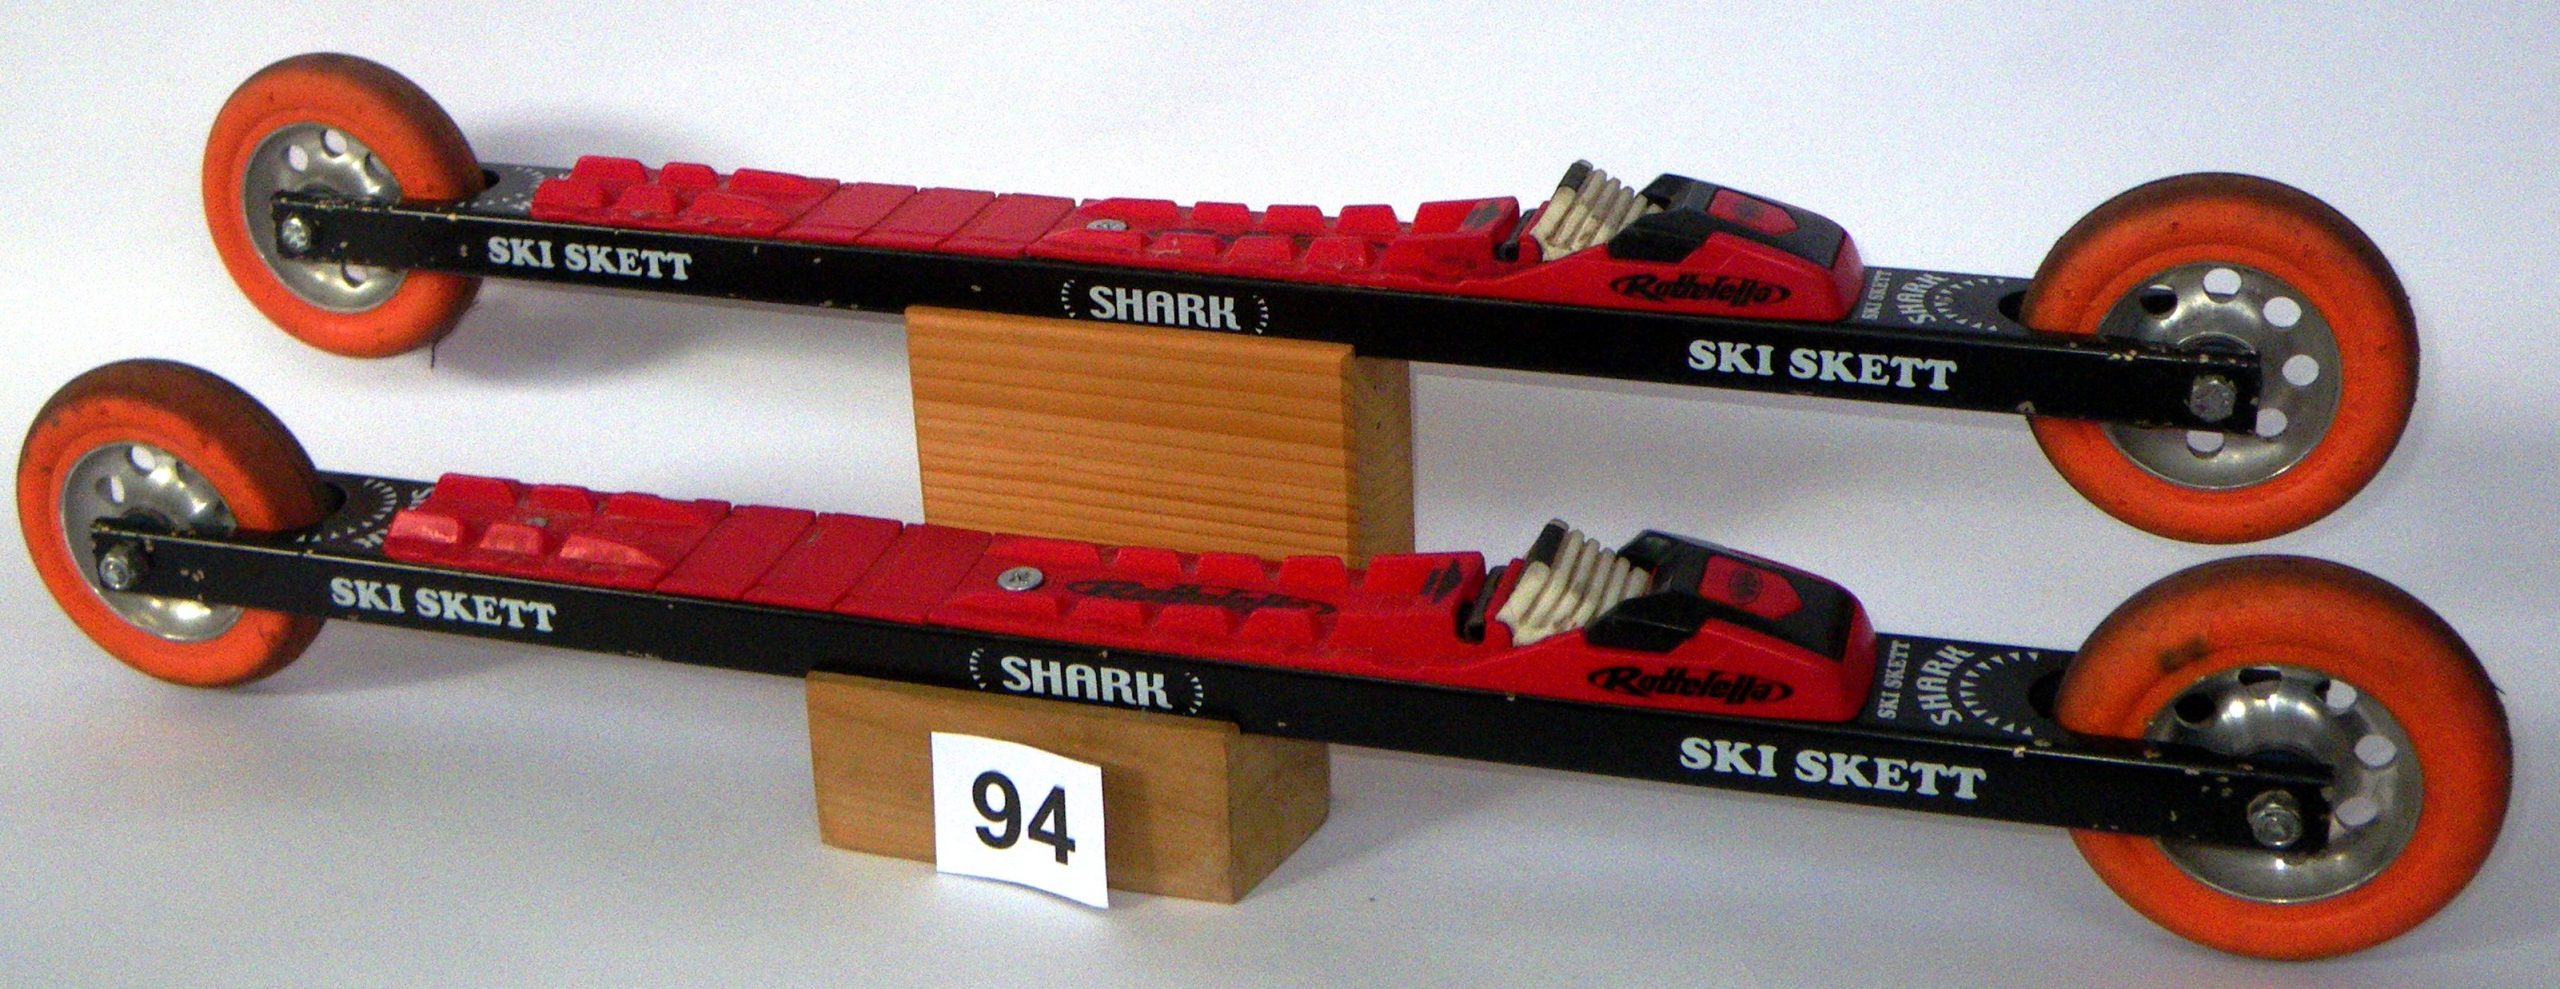 Roller Ski e Skiroll Skiskett prodotto Shark 53 PL 94